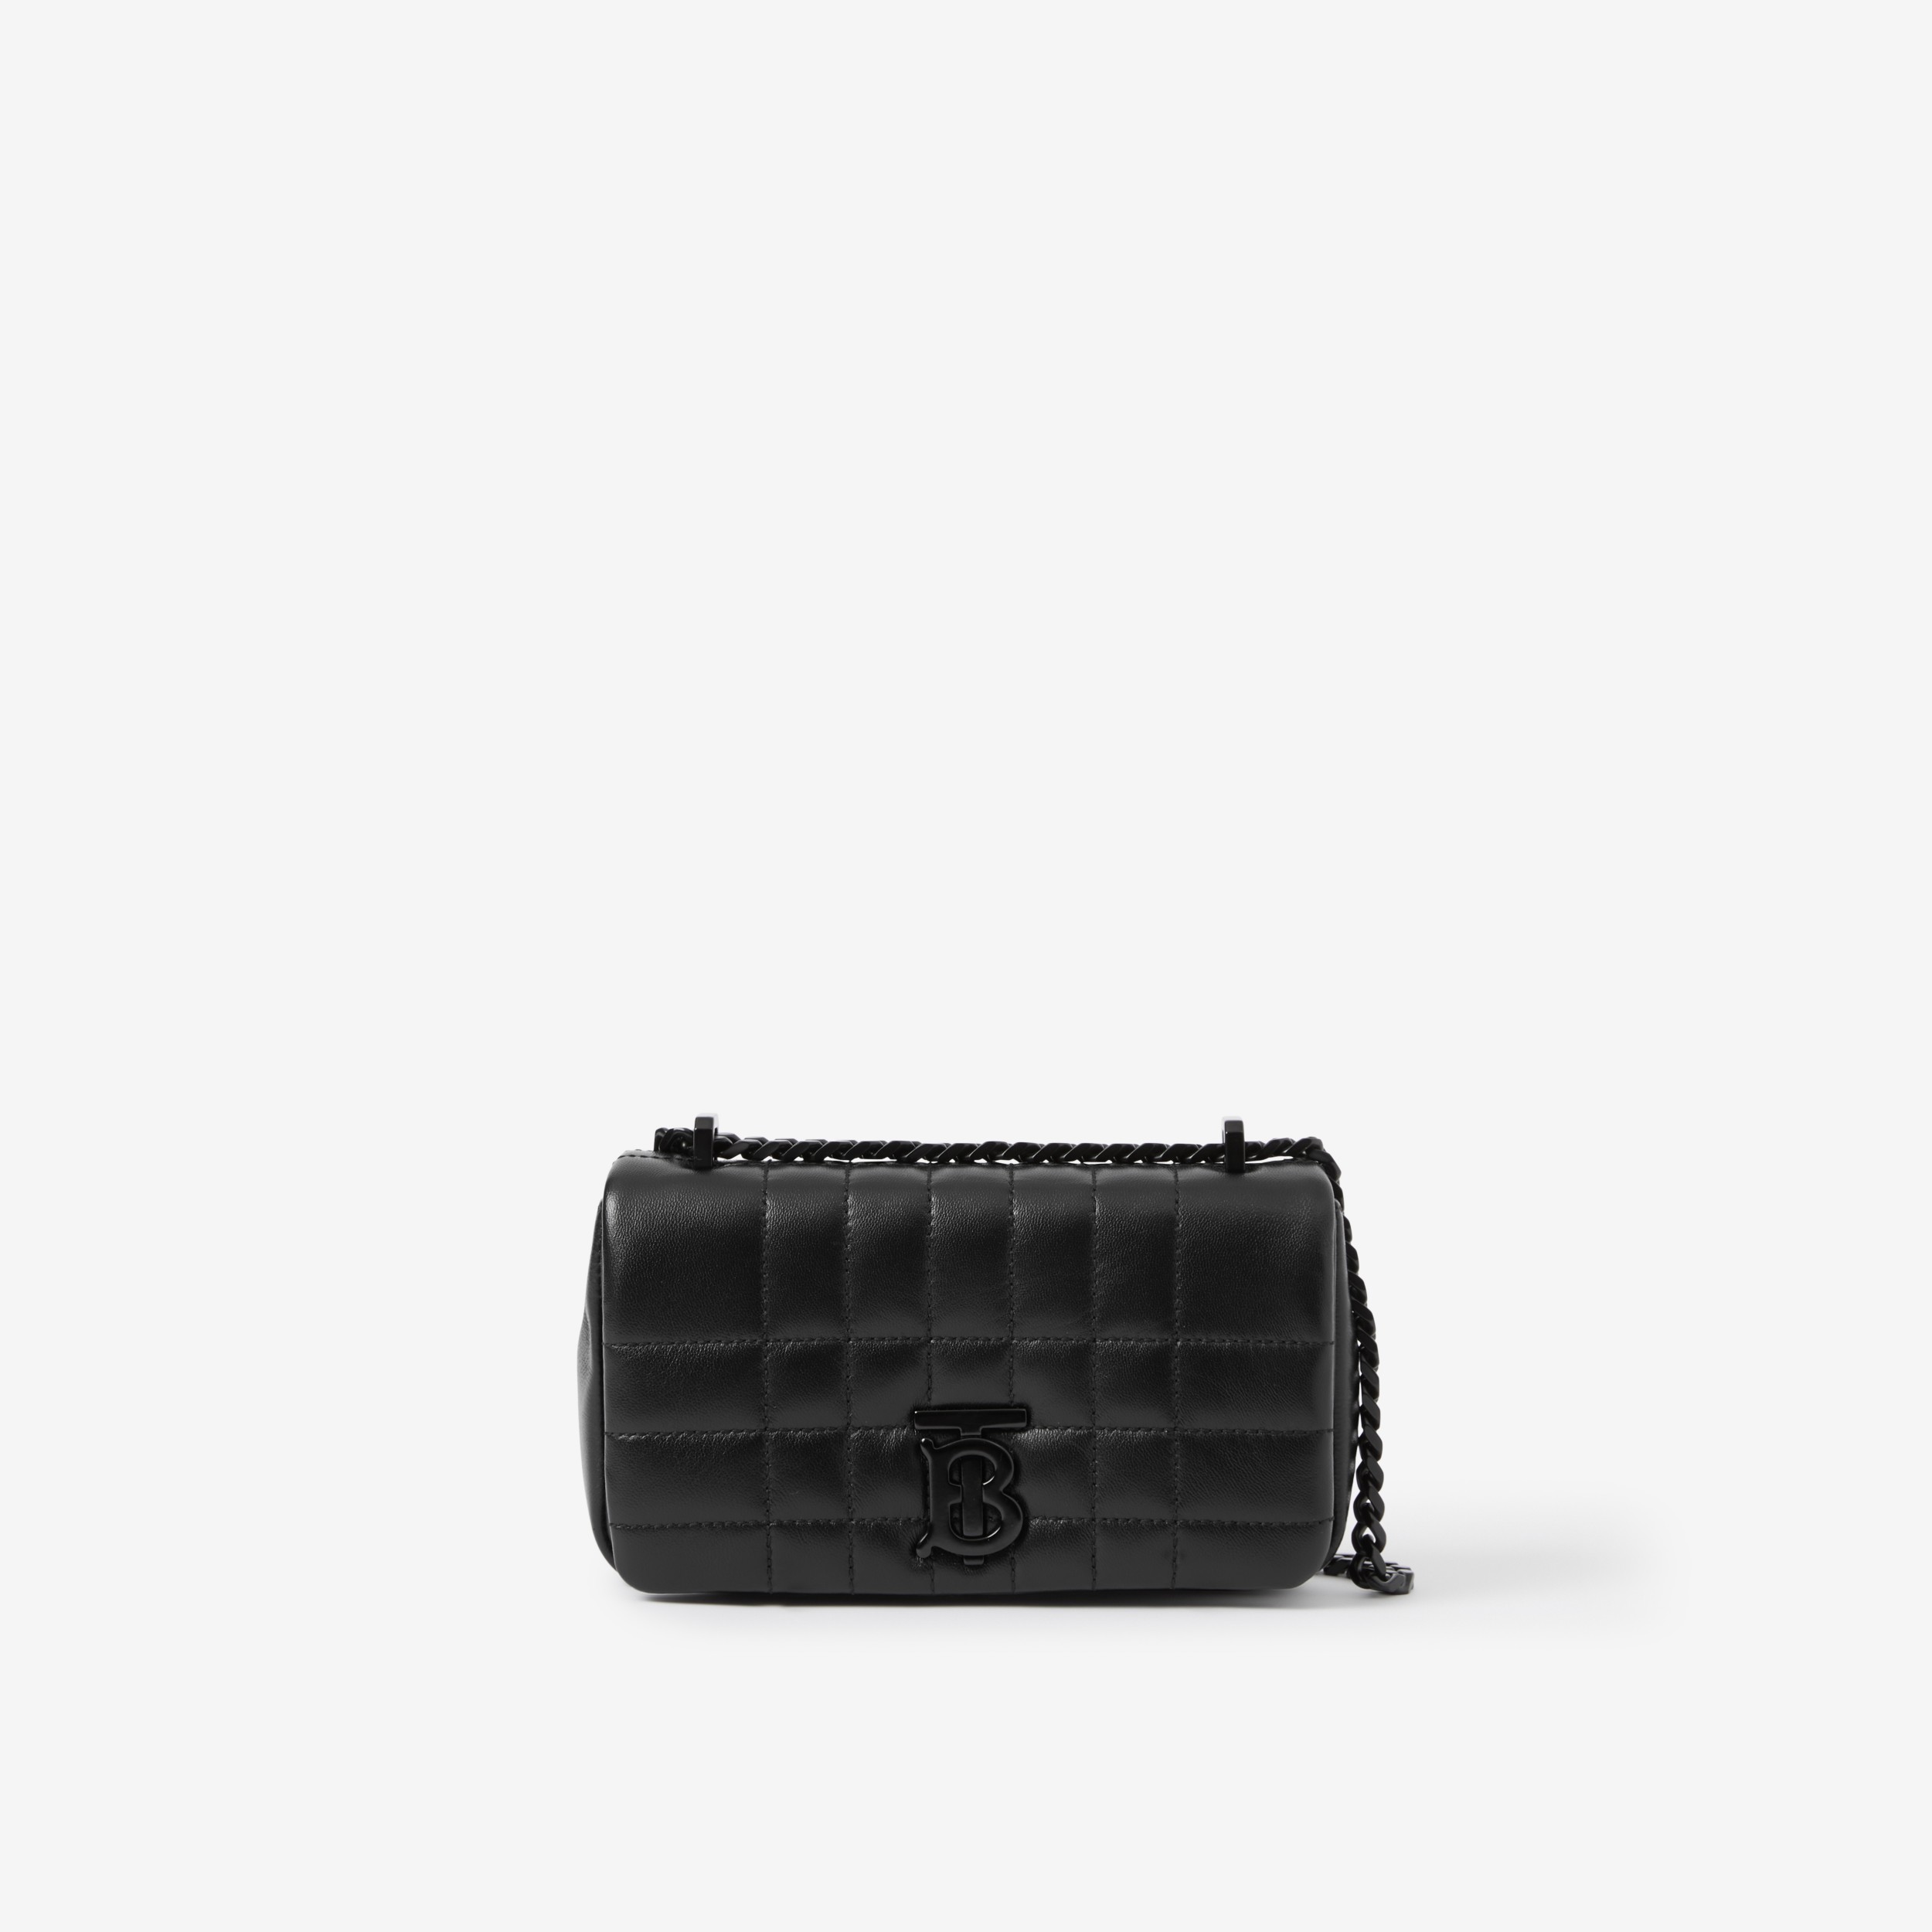 Actualizar 54+ imagen burberry mini bag black